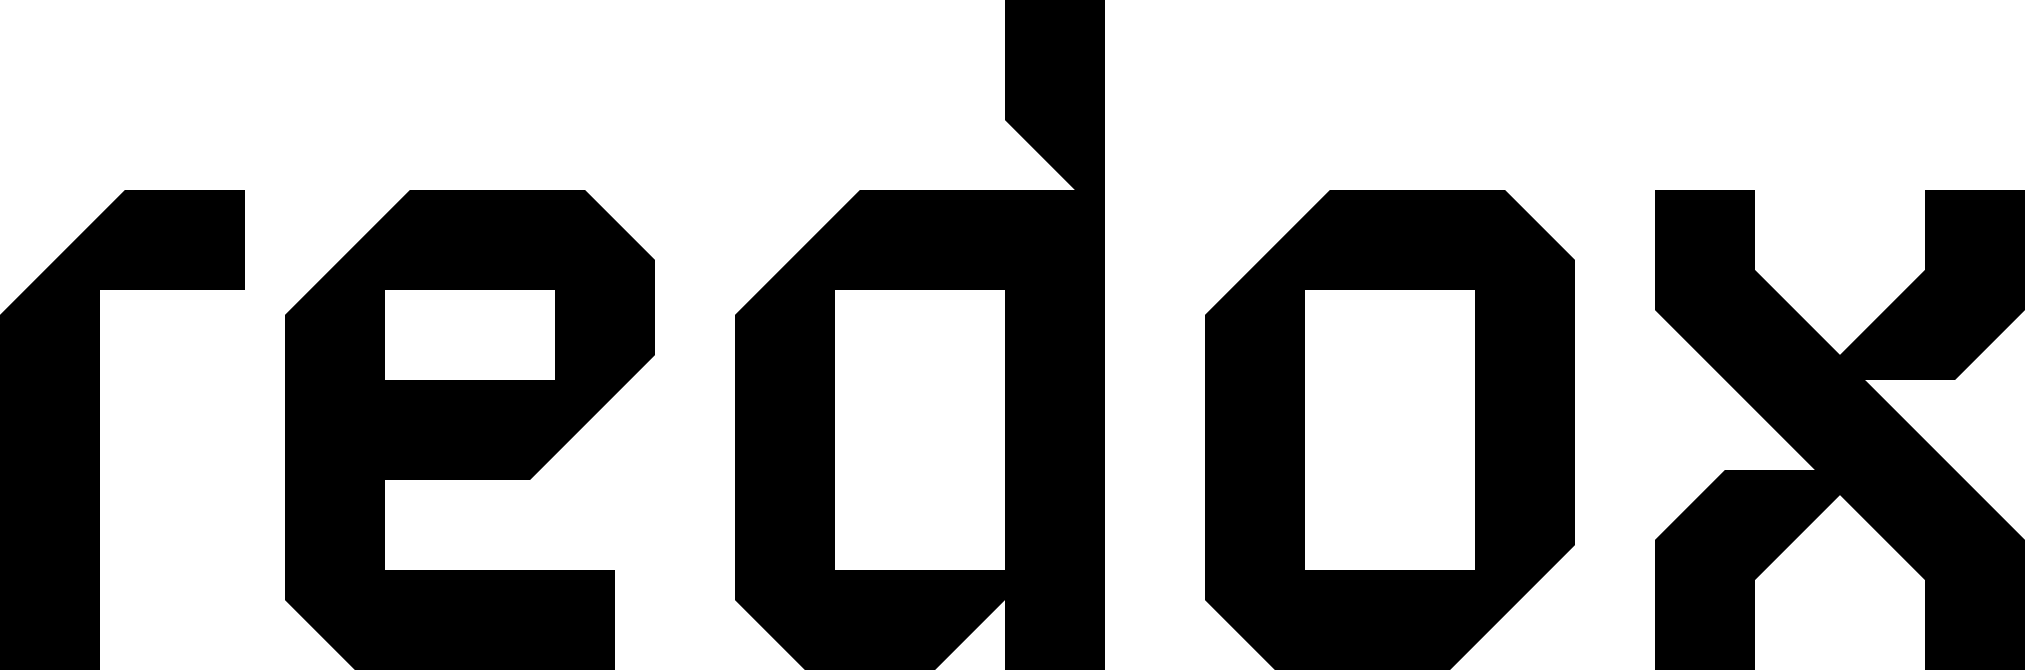 redox logo black